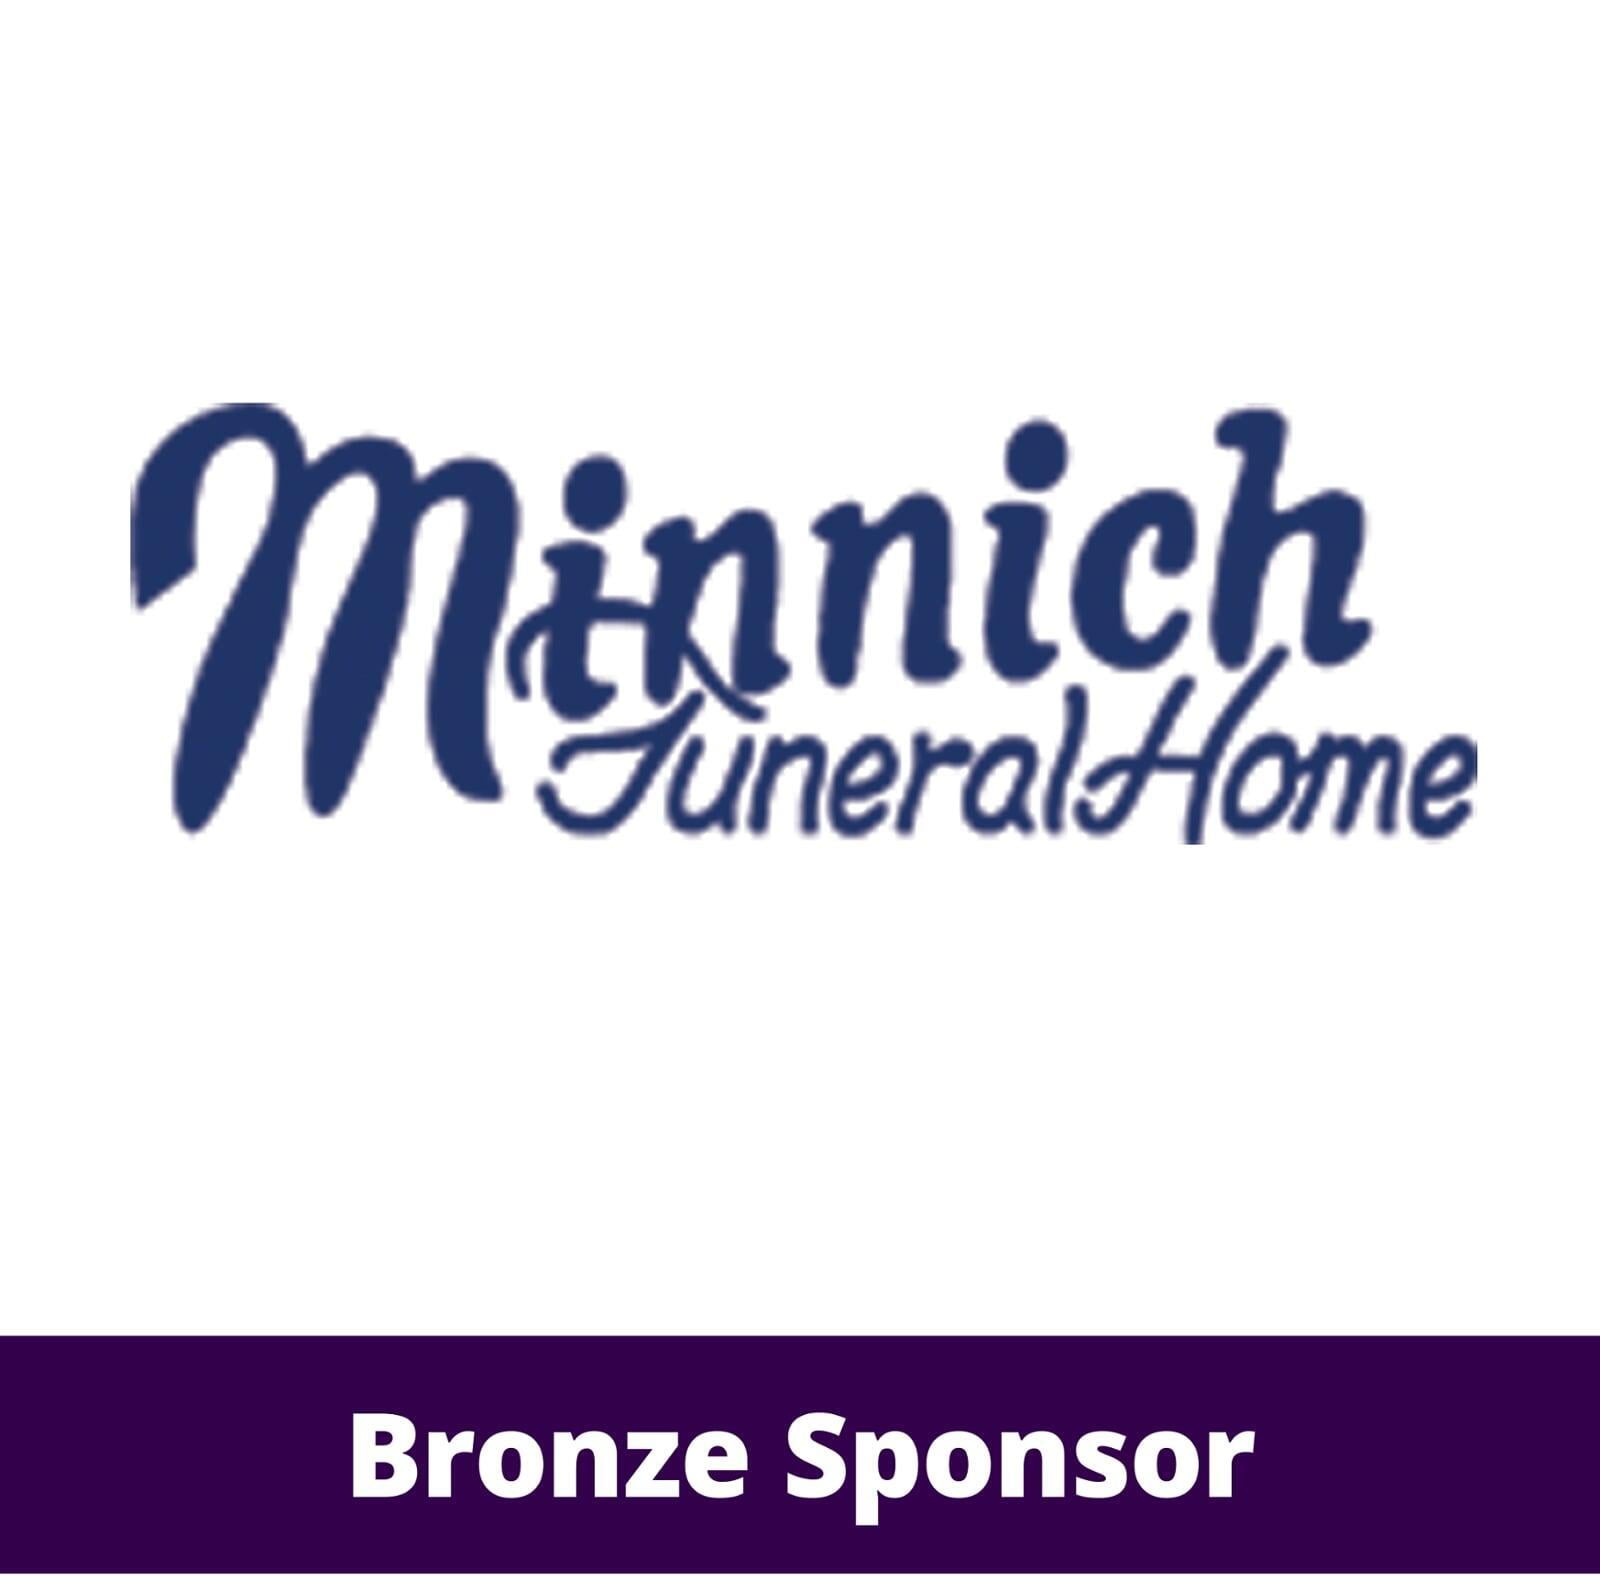 Minnich Funeral Home